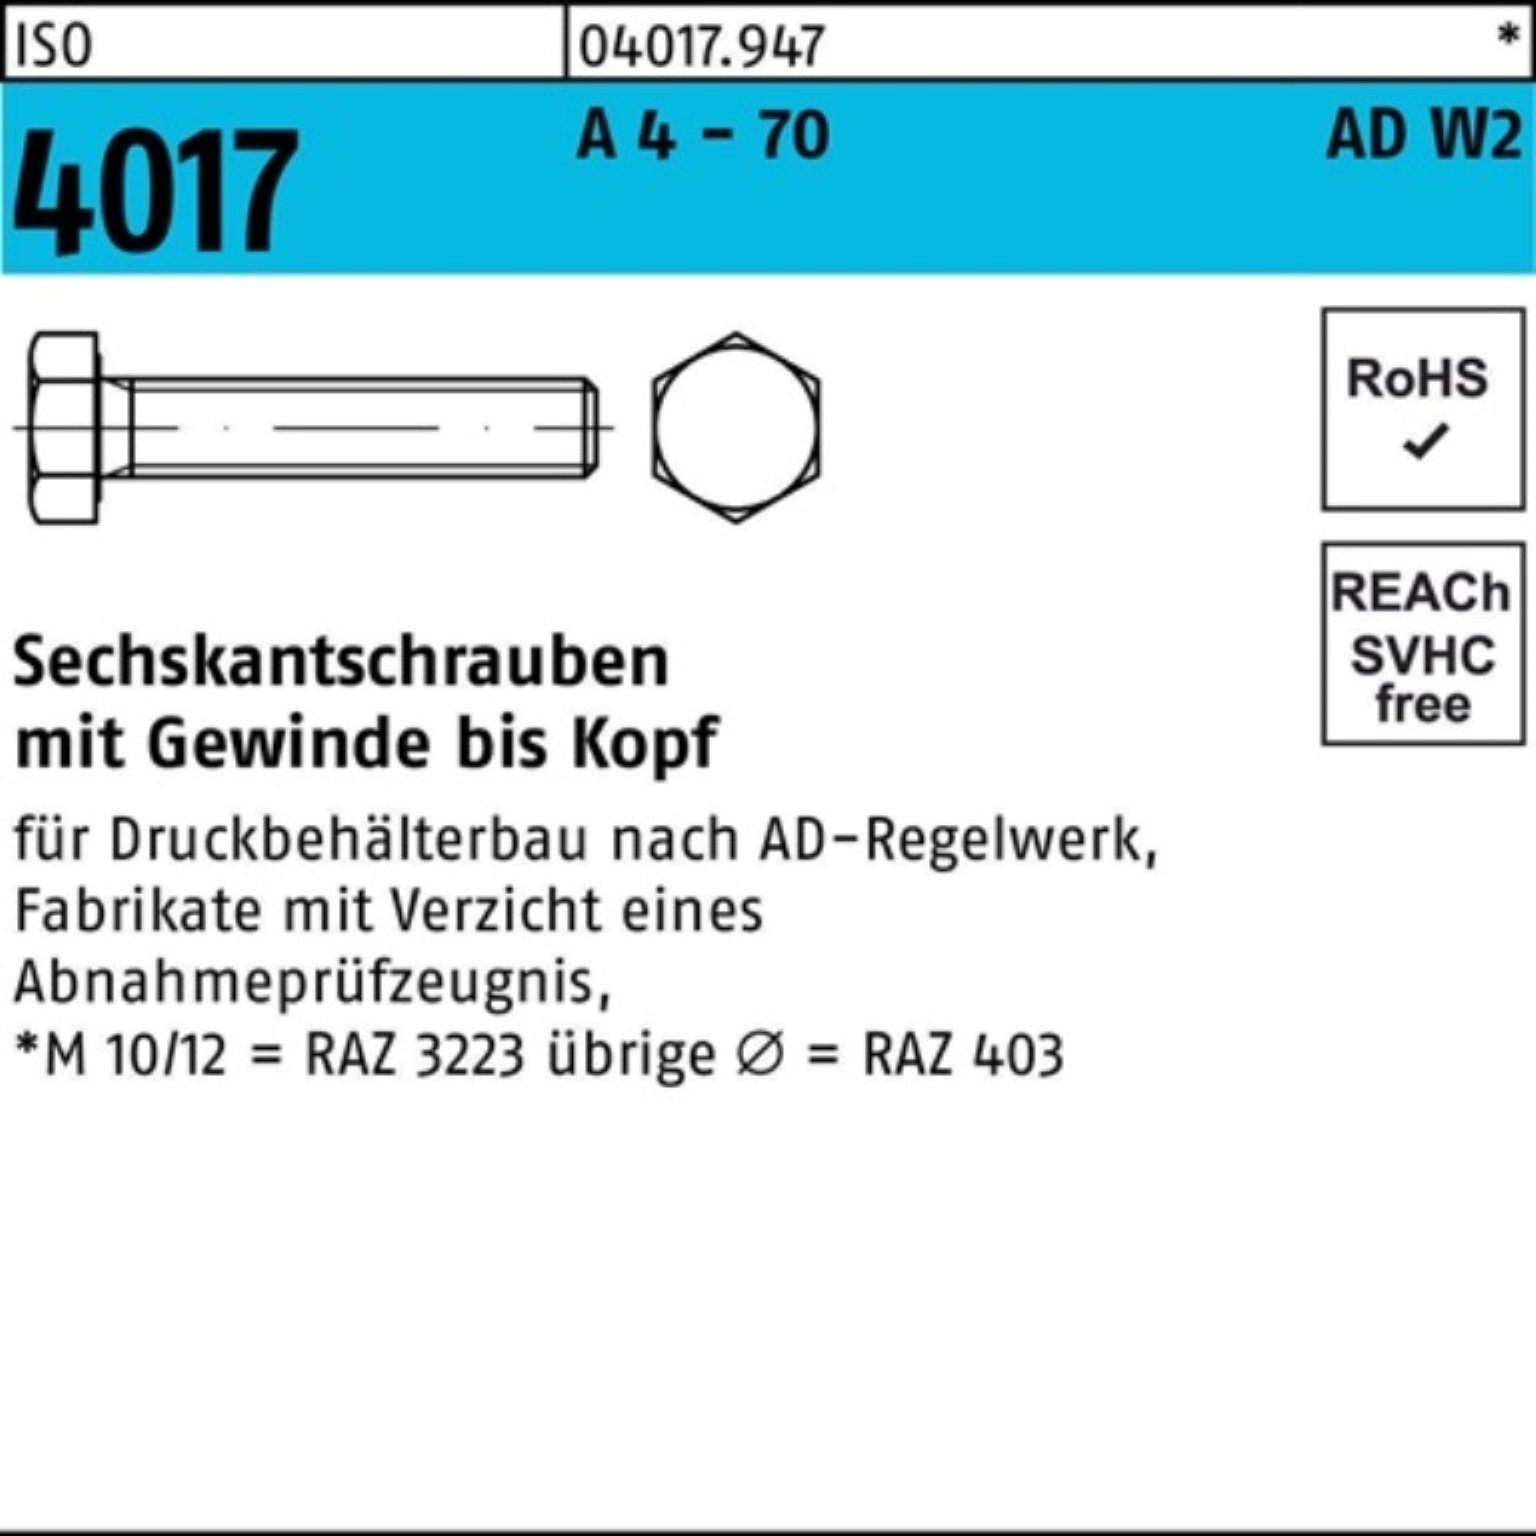 Bufab Sechskantschraube 100er Pack Sechskantschraube ISO 4017 VG M20x 160 A 4 - 70 AD-W2 1 St